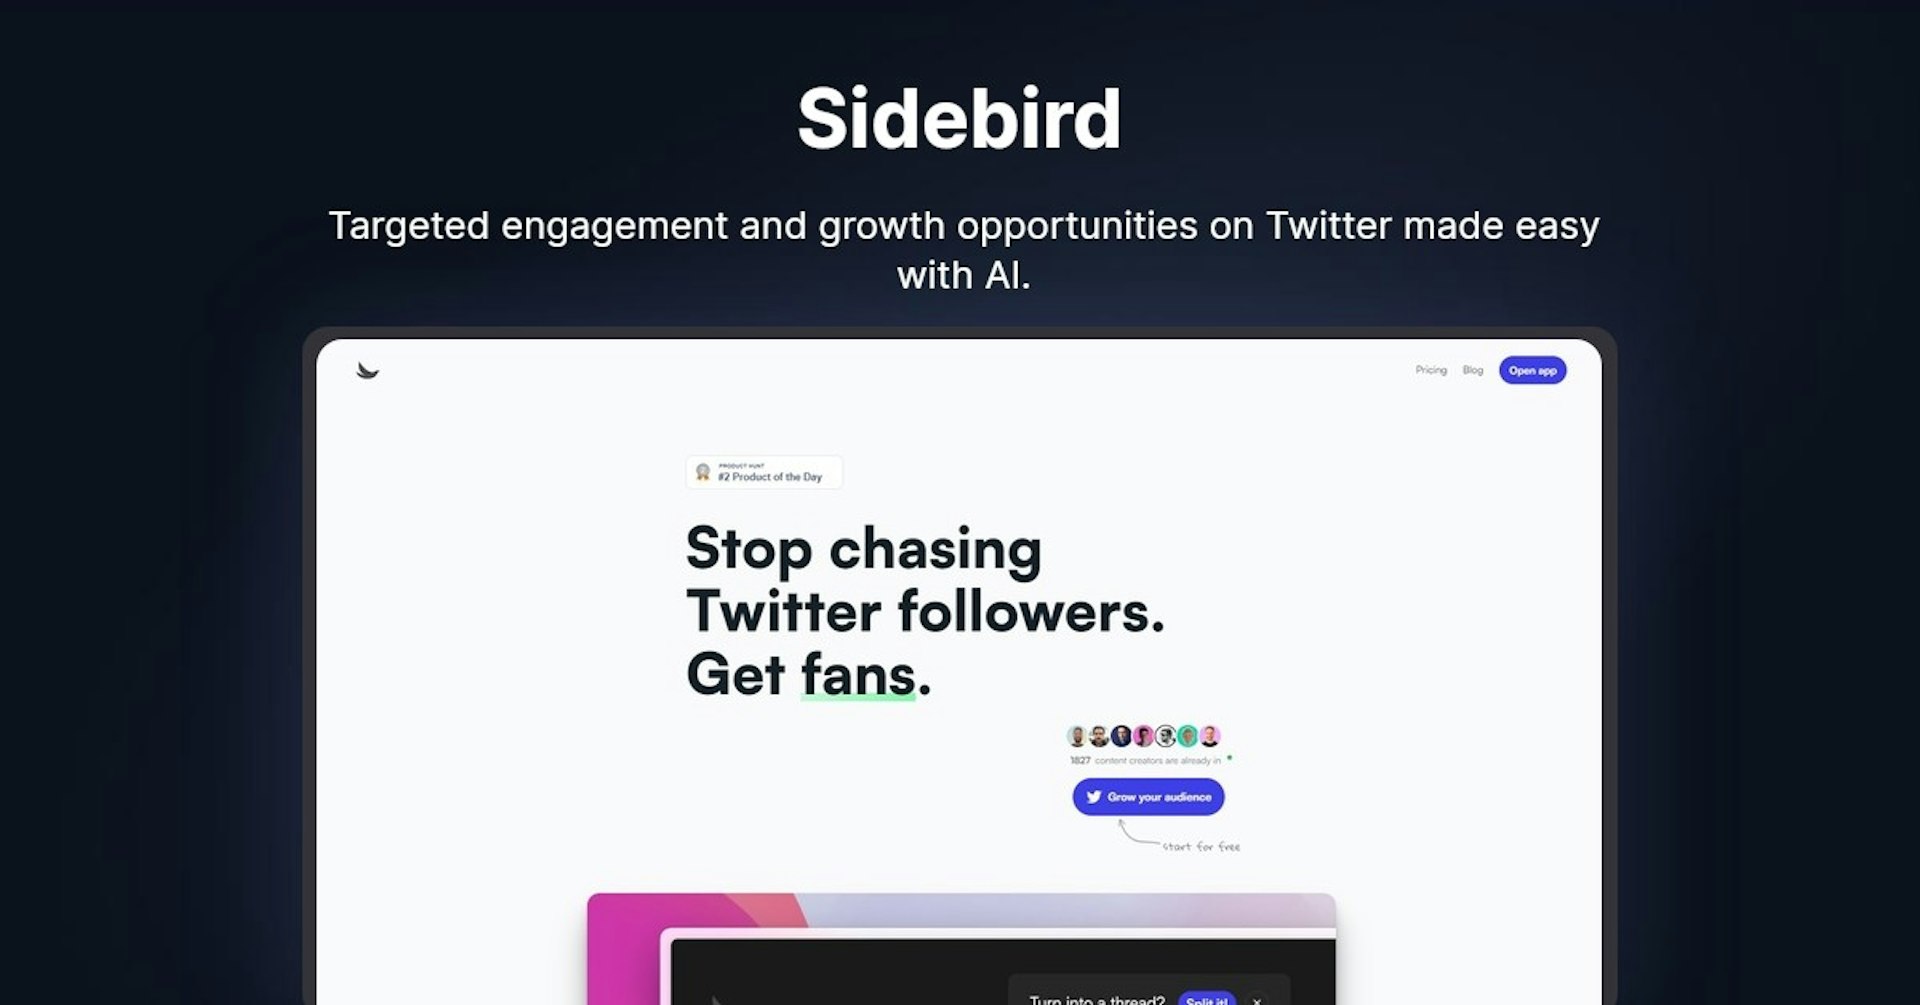 Sidebird